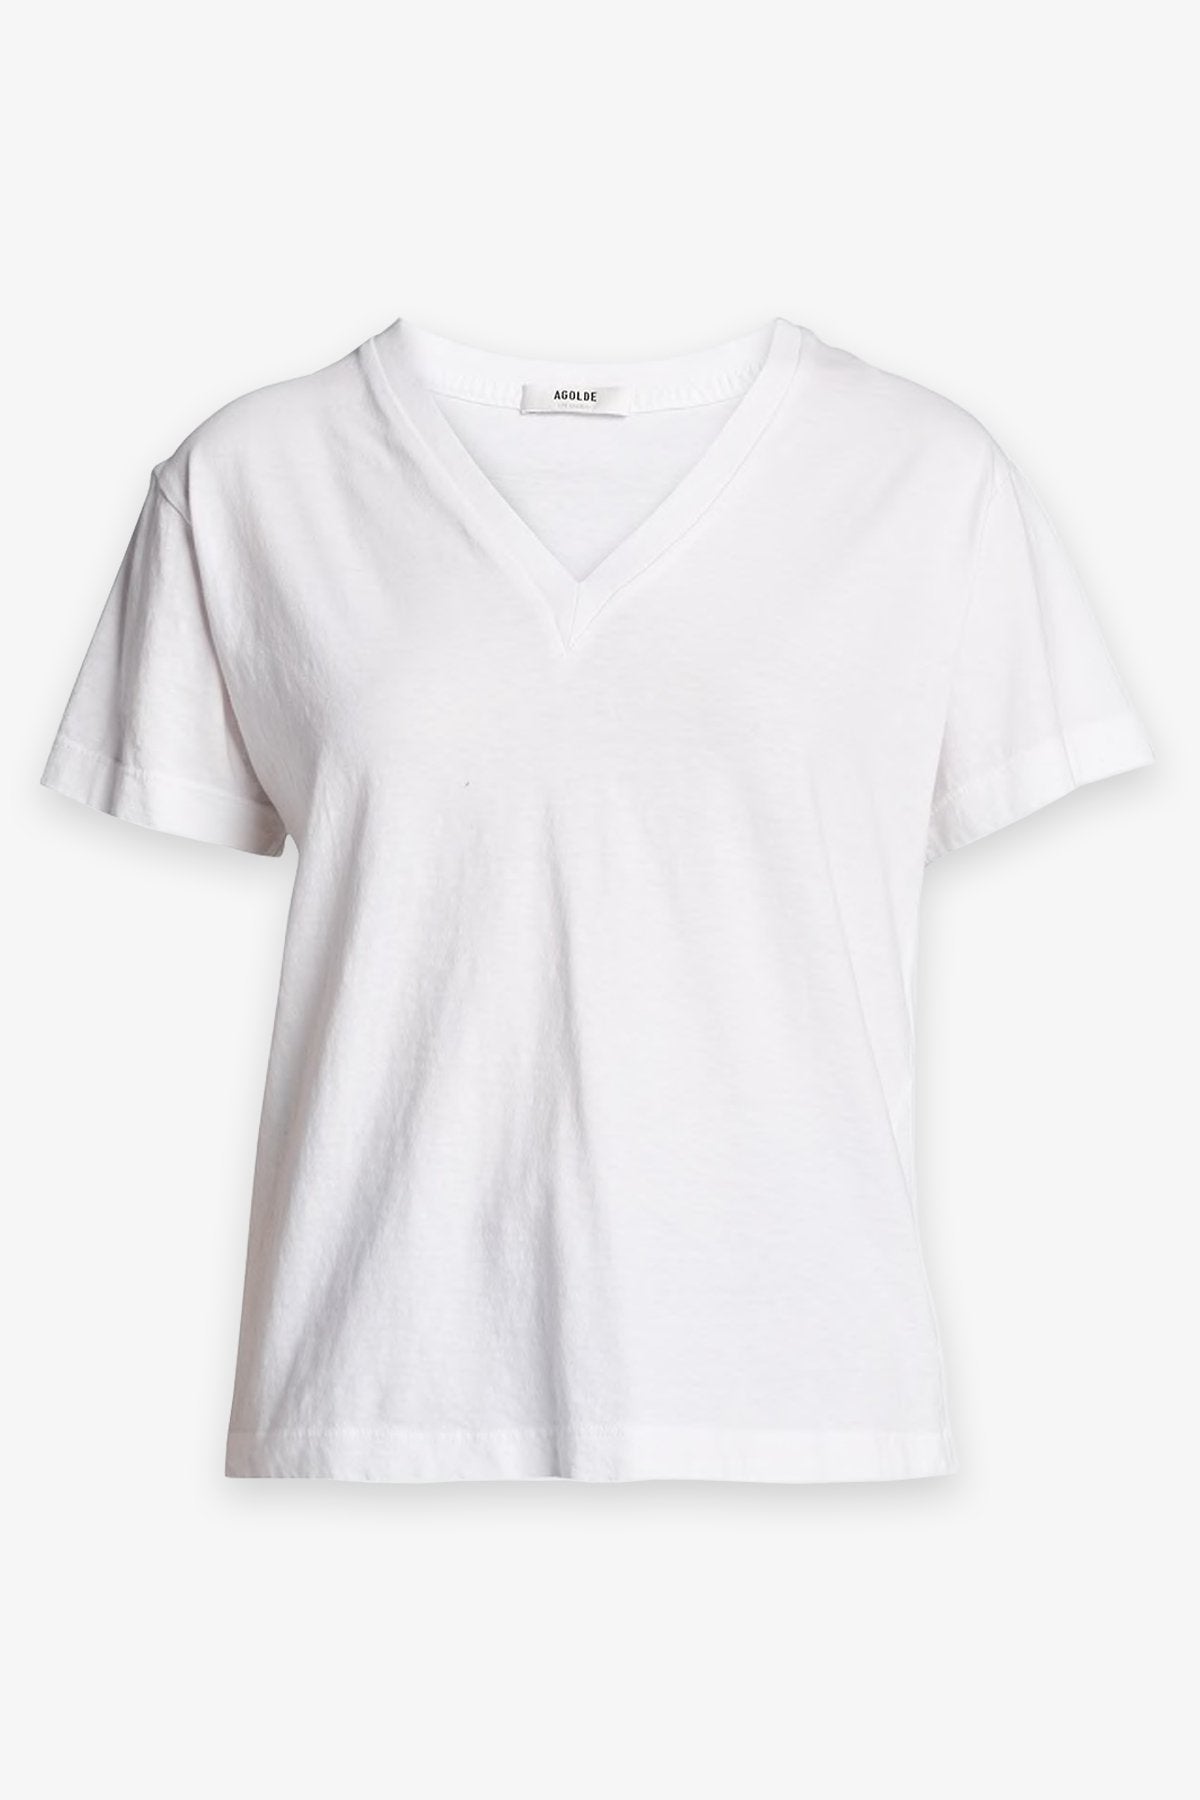 Thea V-Neck Easy T-Shirt in White - shop-olivia.com